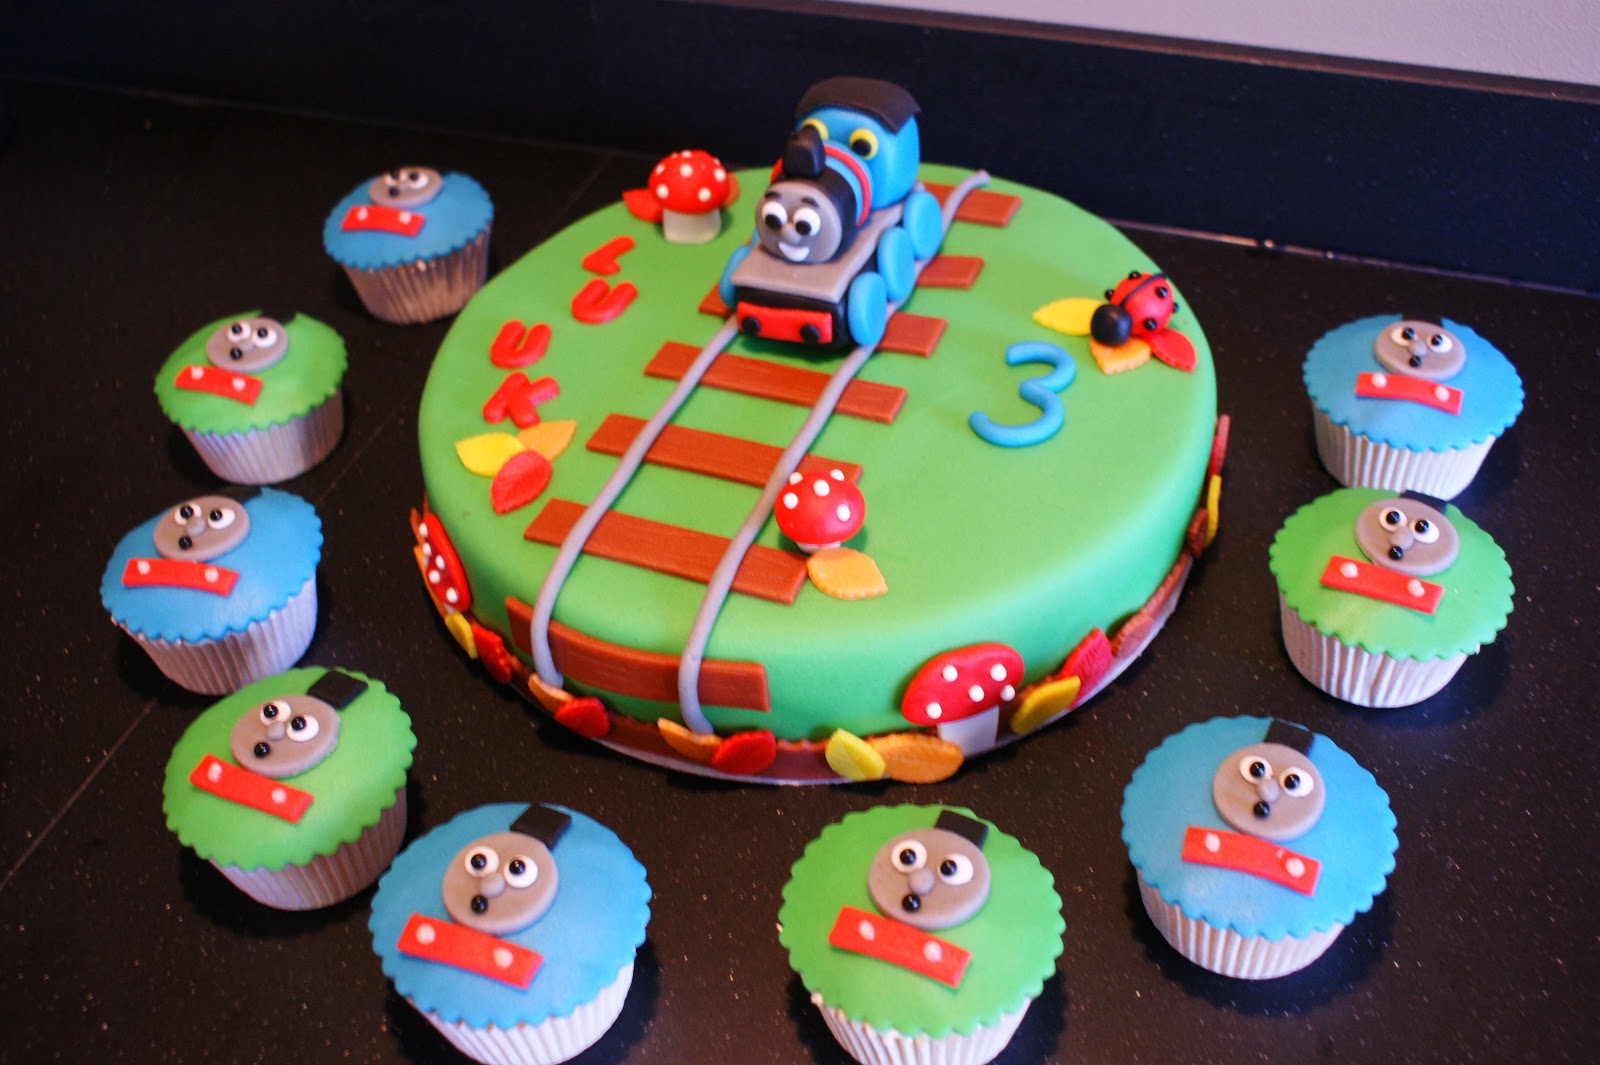 Ongekend cup of cake: Thomas de trein taart & cupcakes ZI-37